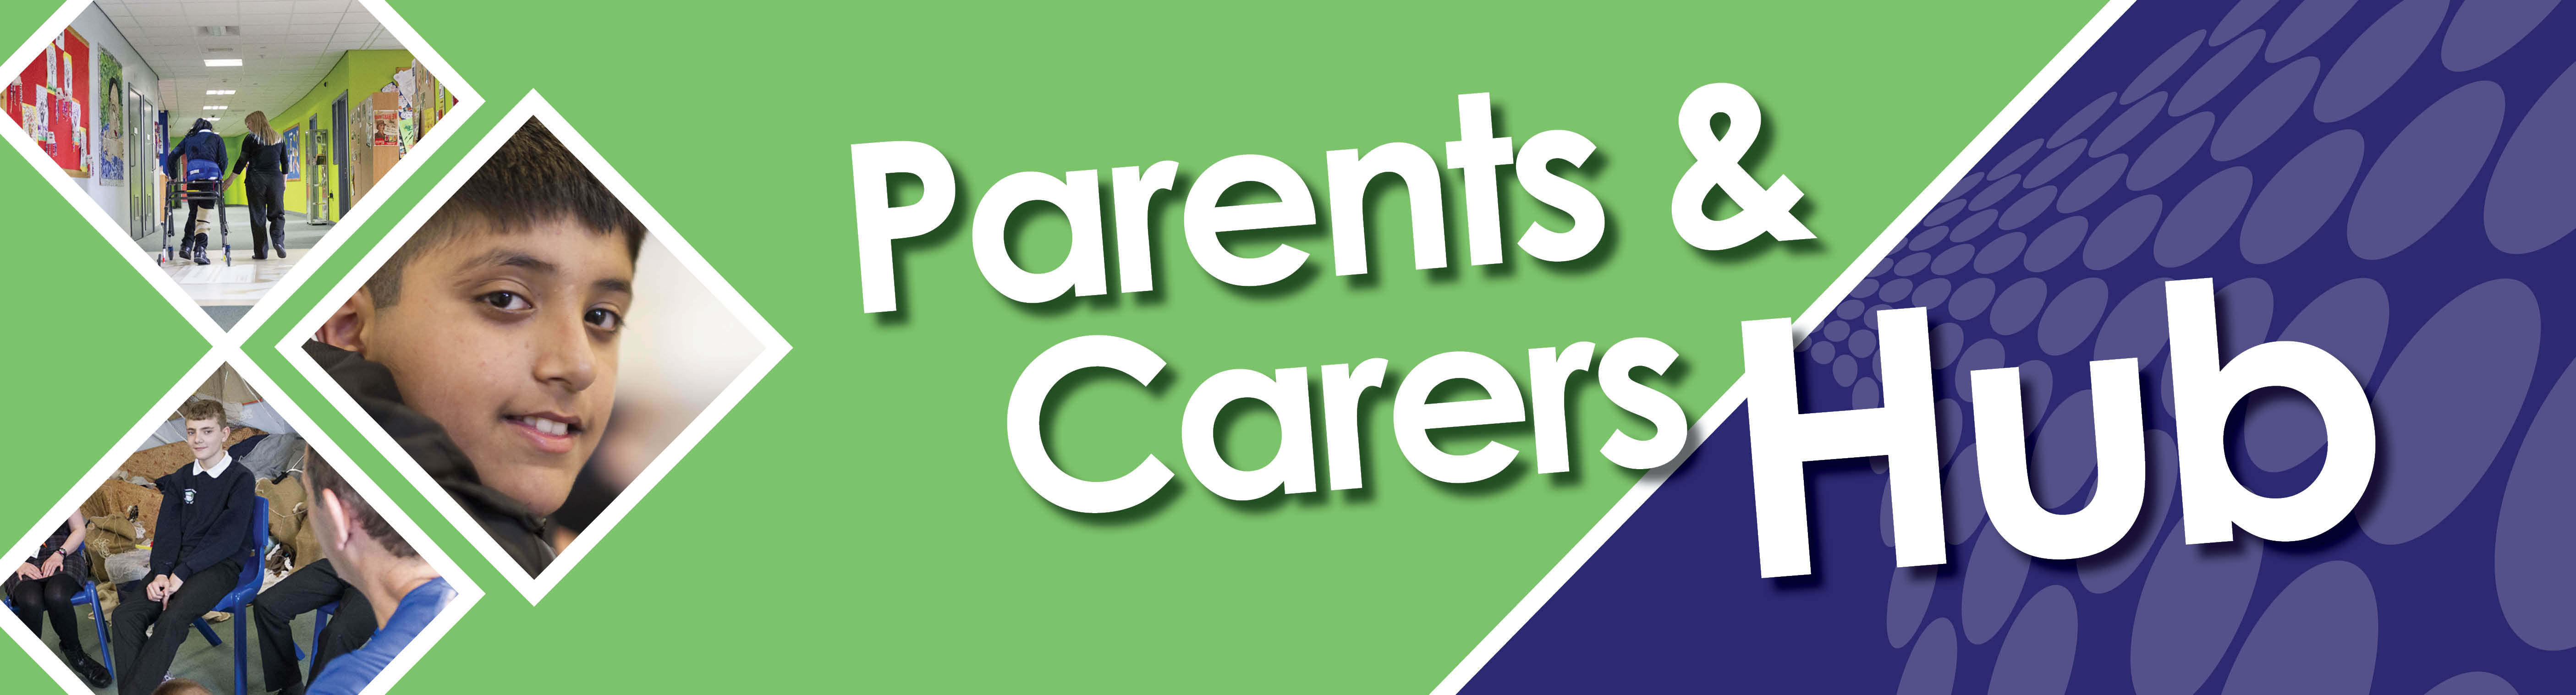 Parents carers hub